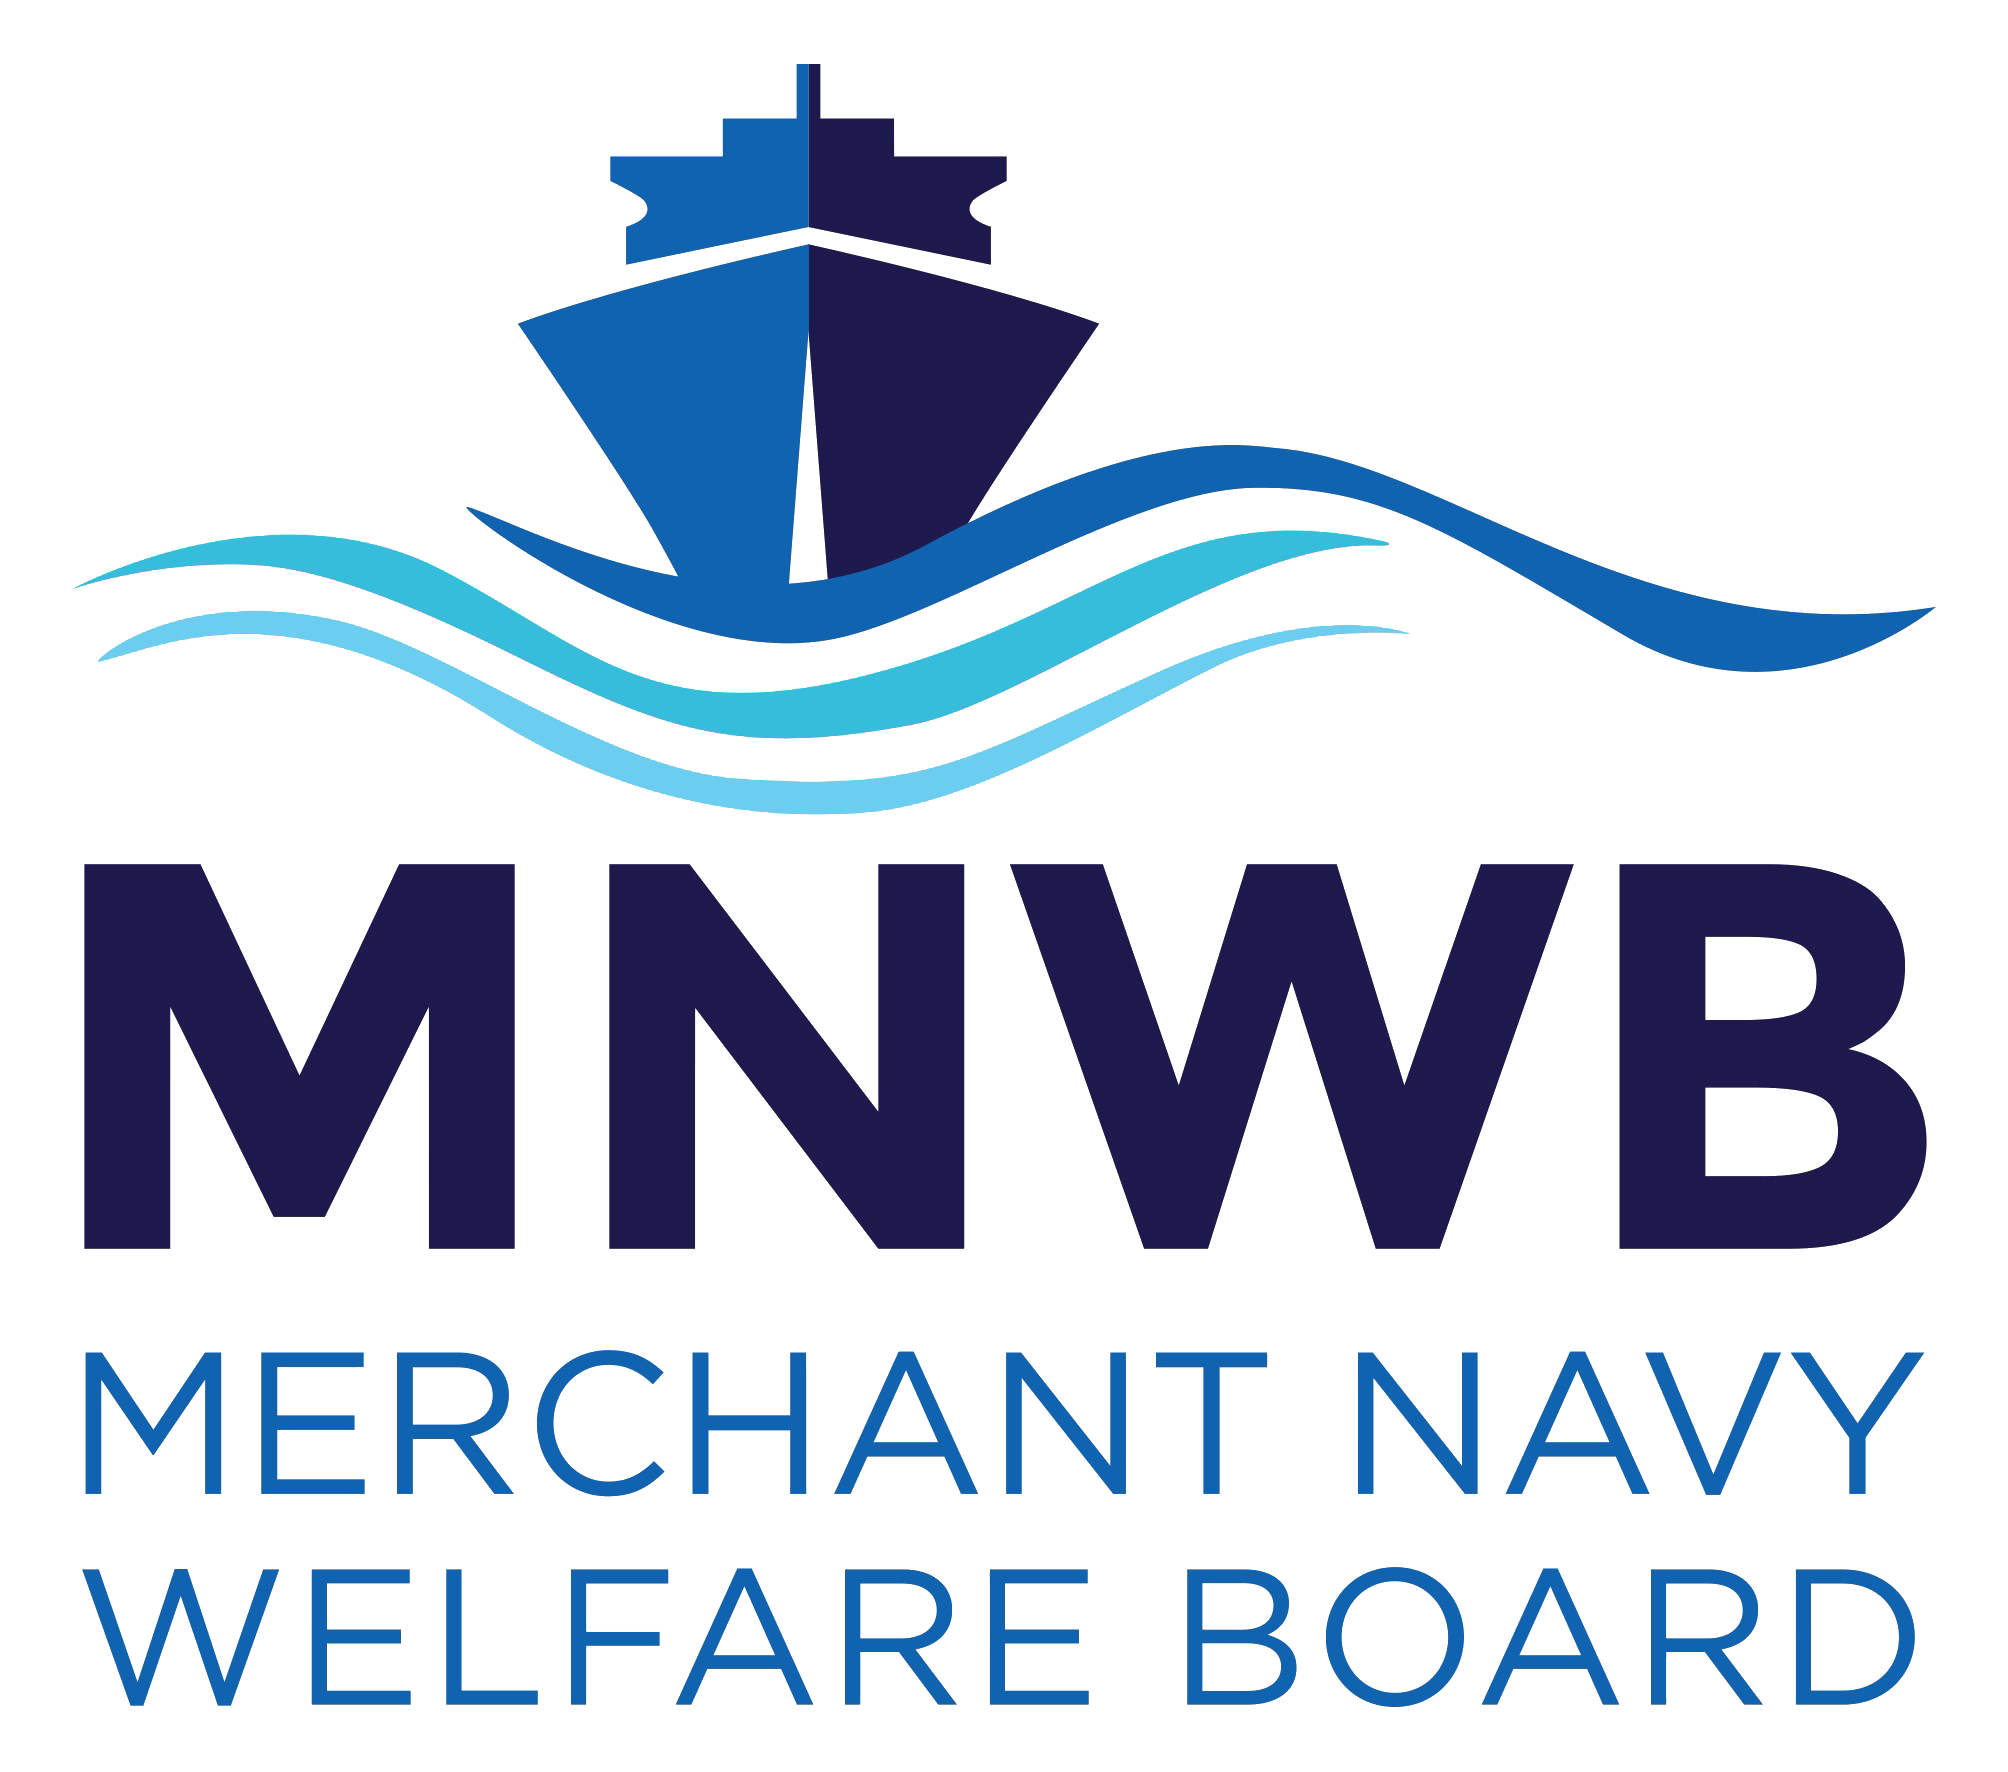 Merchant navy welfare board